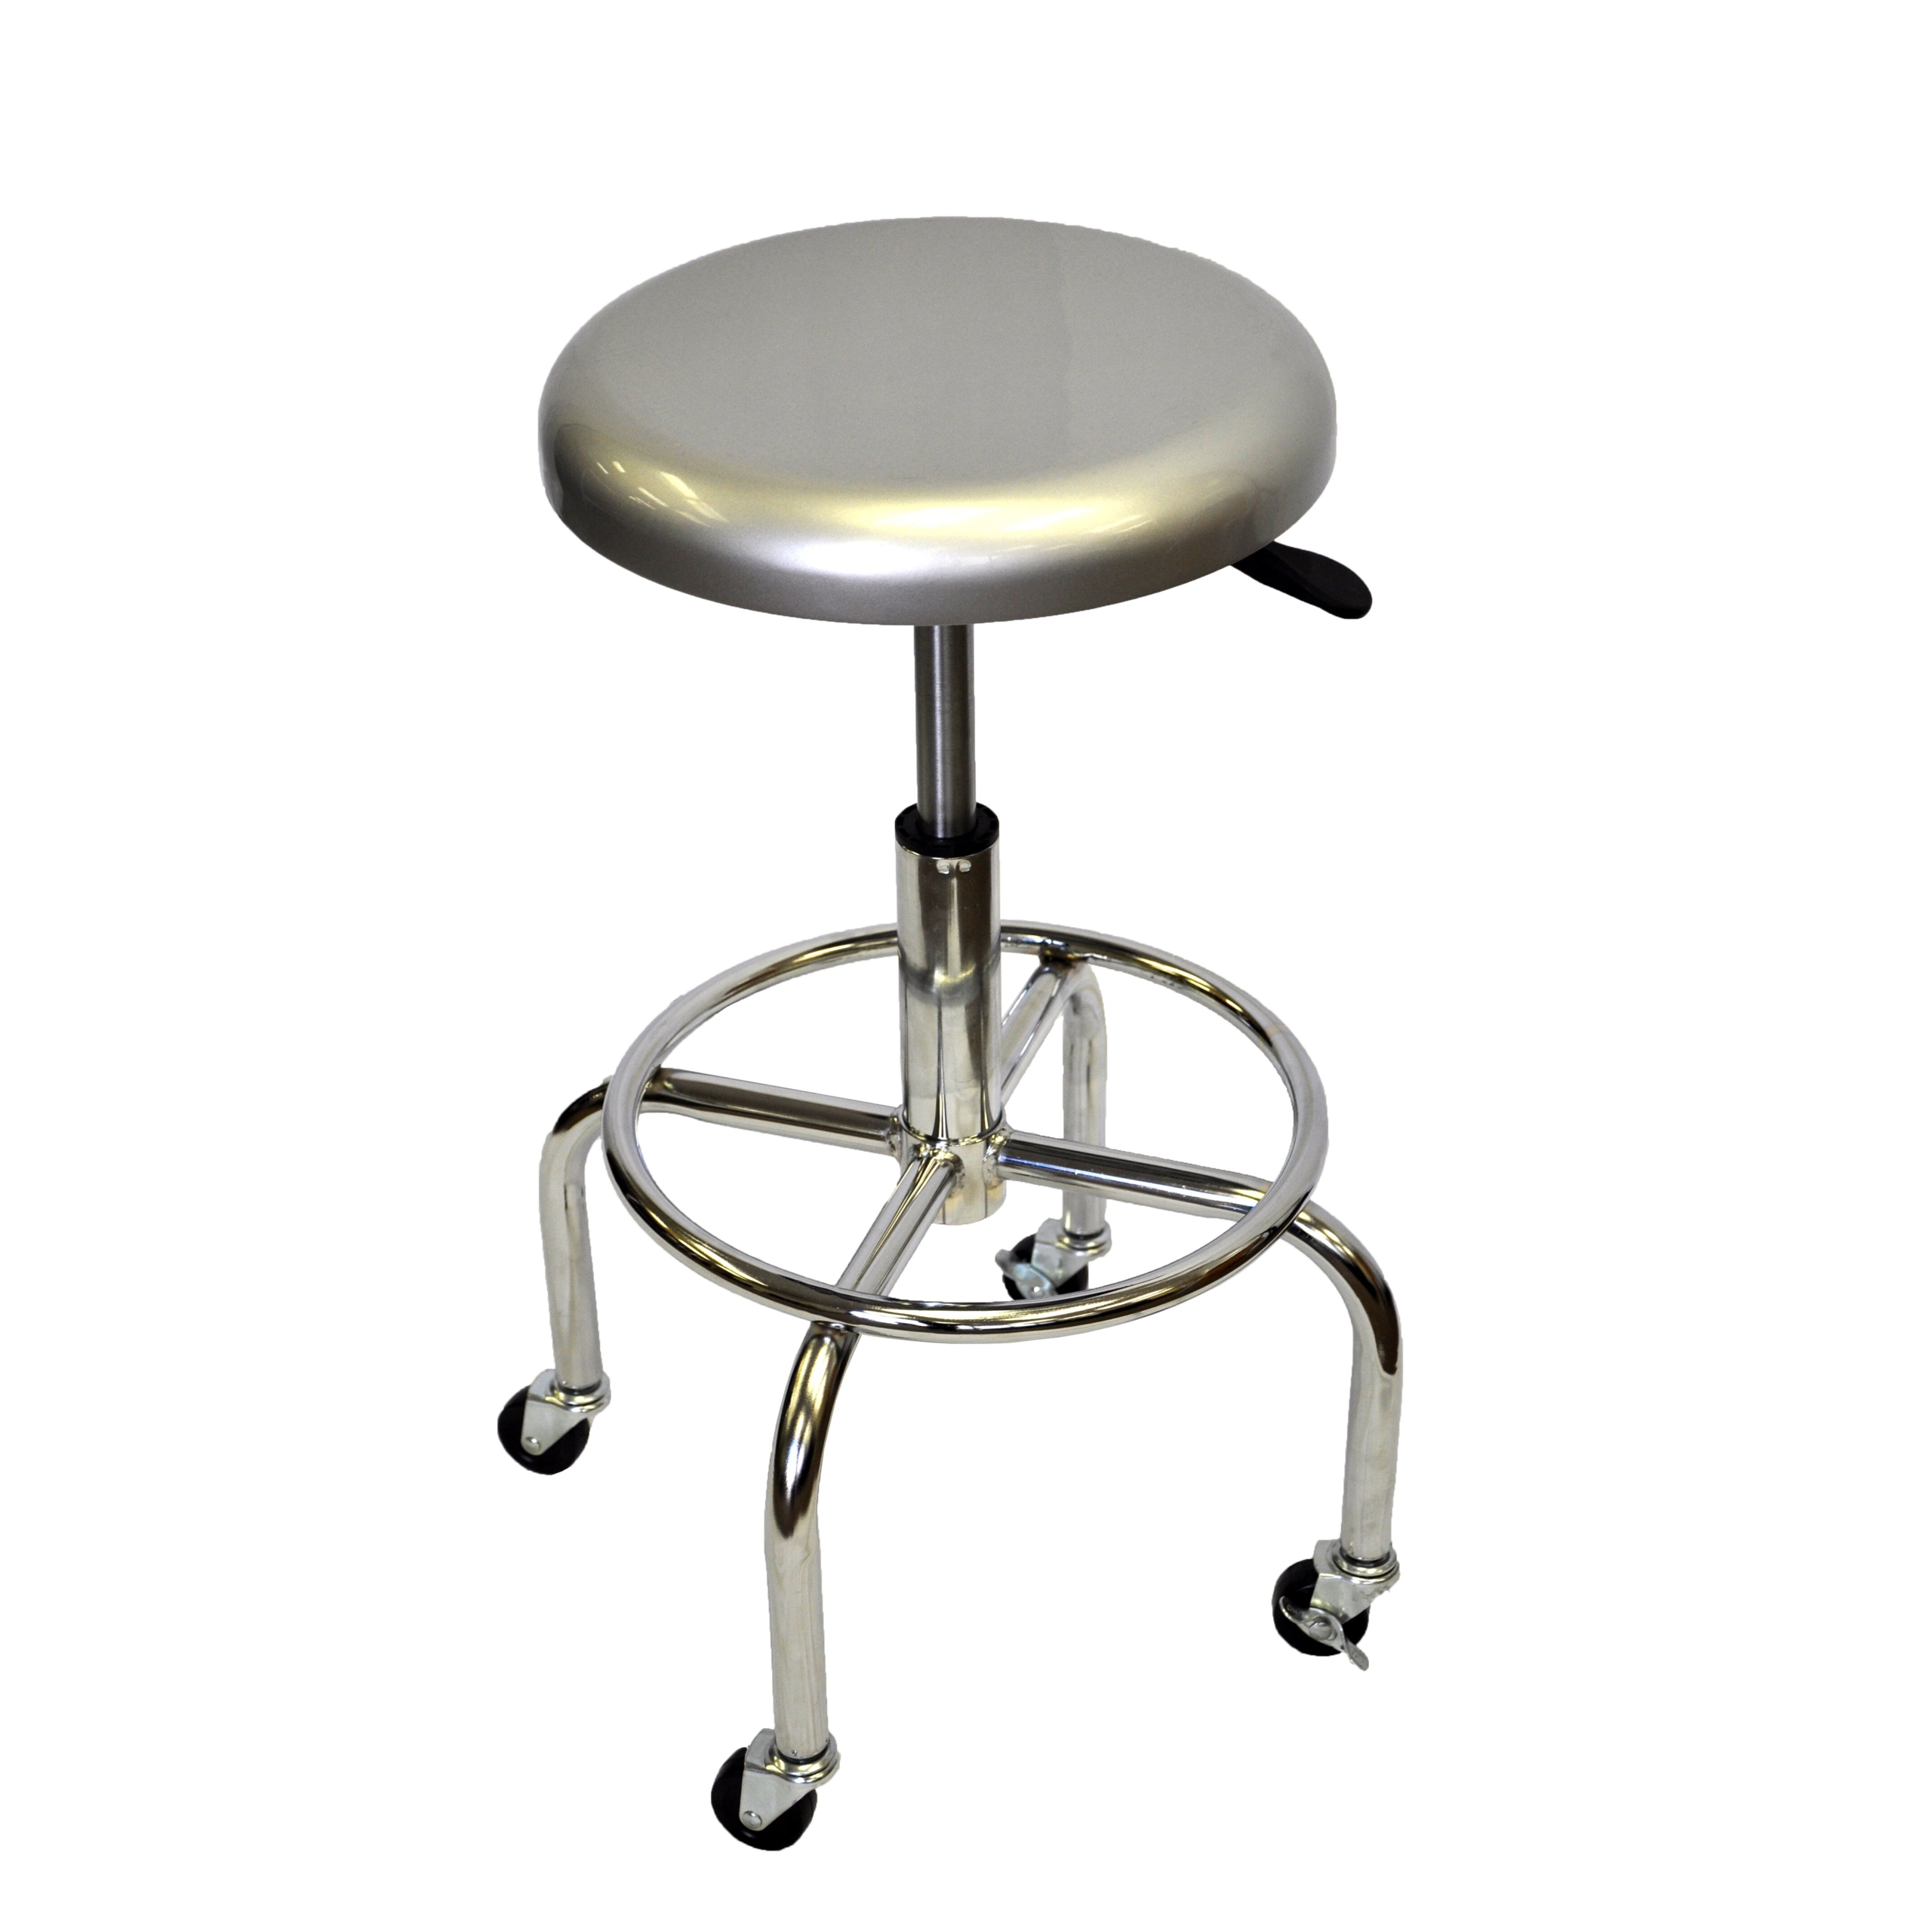 Bar stool with wheels